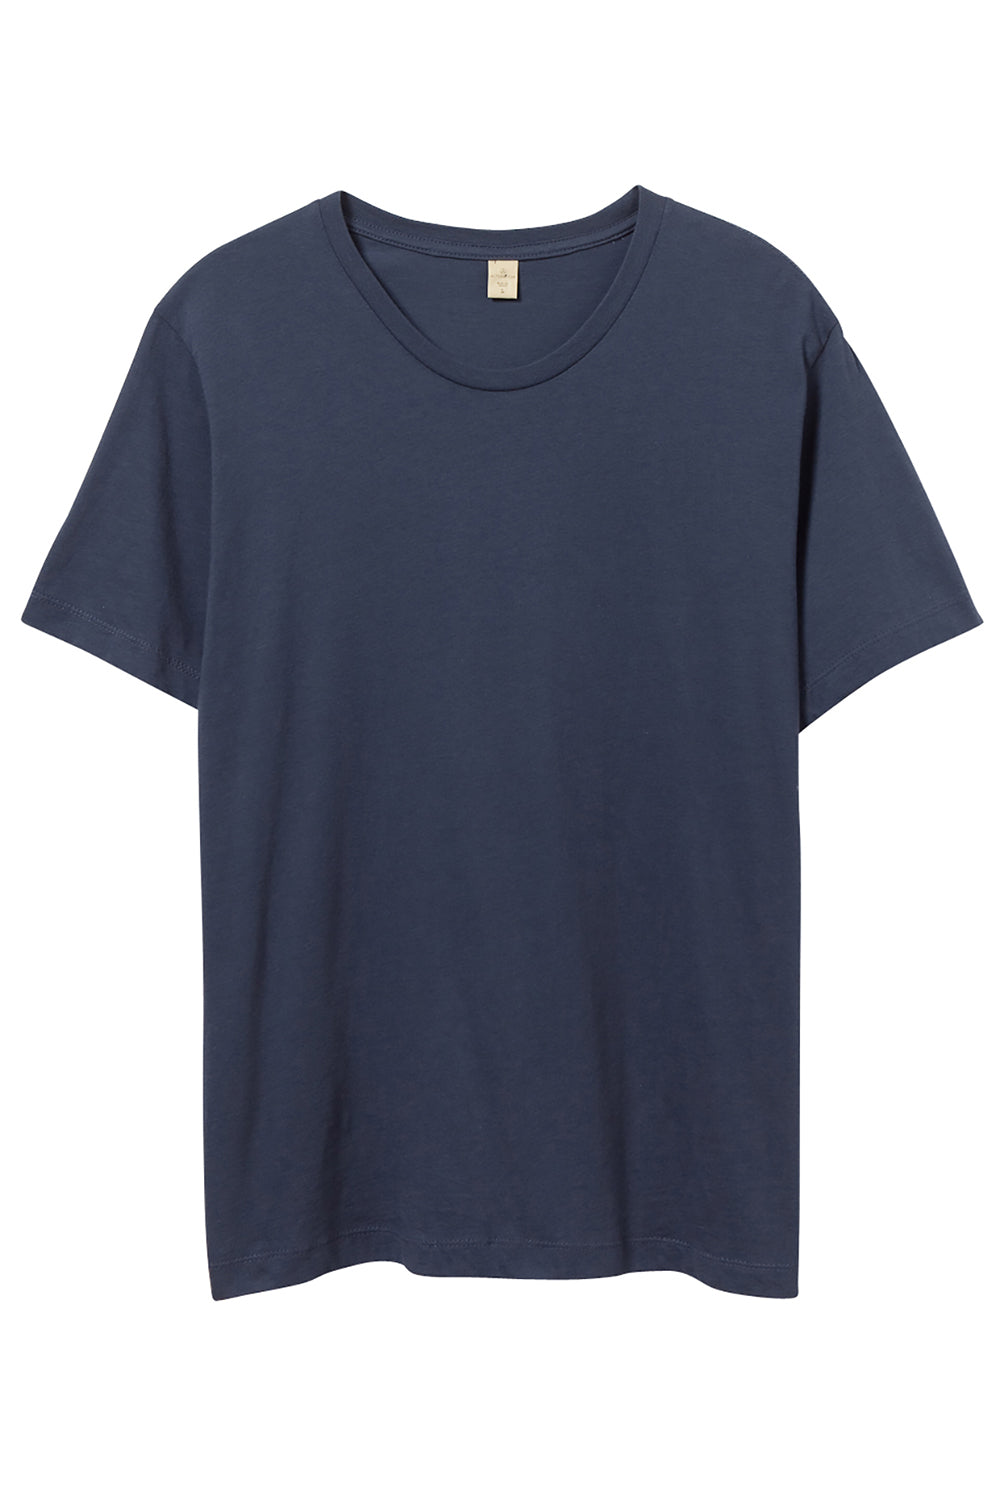 Alternative AA1070/1070 Mens Go To Jersey Short Sleeve Crewneck T-Shirt Light Navy Blue Flat Front